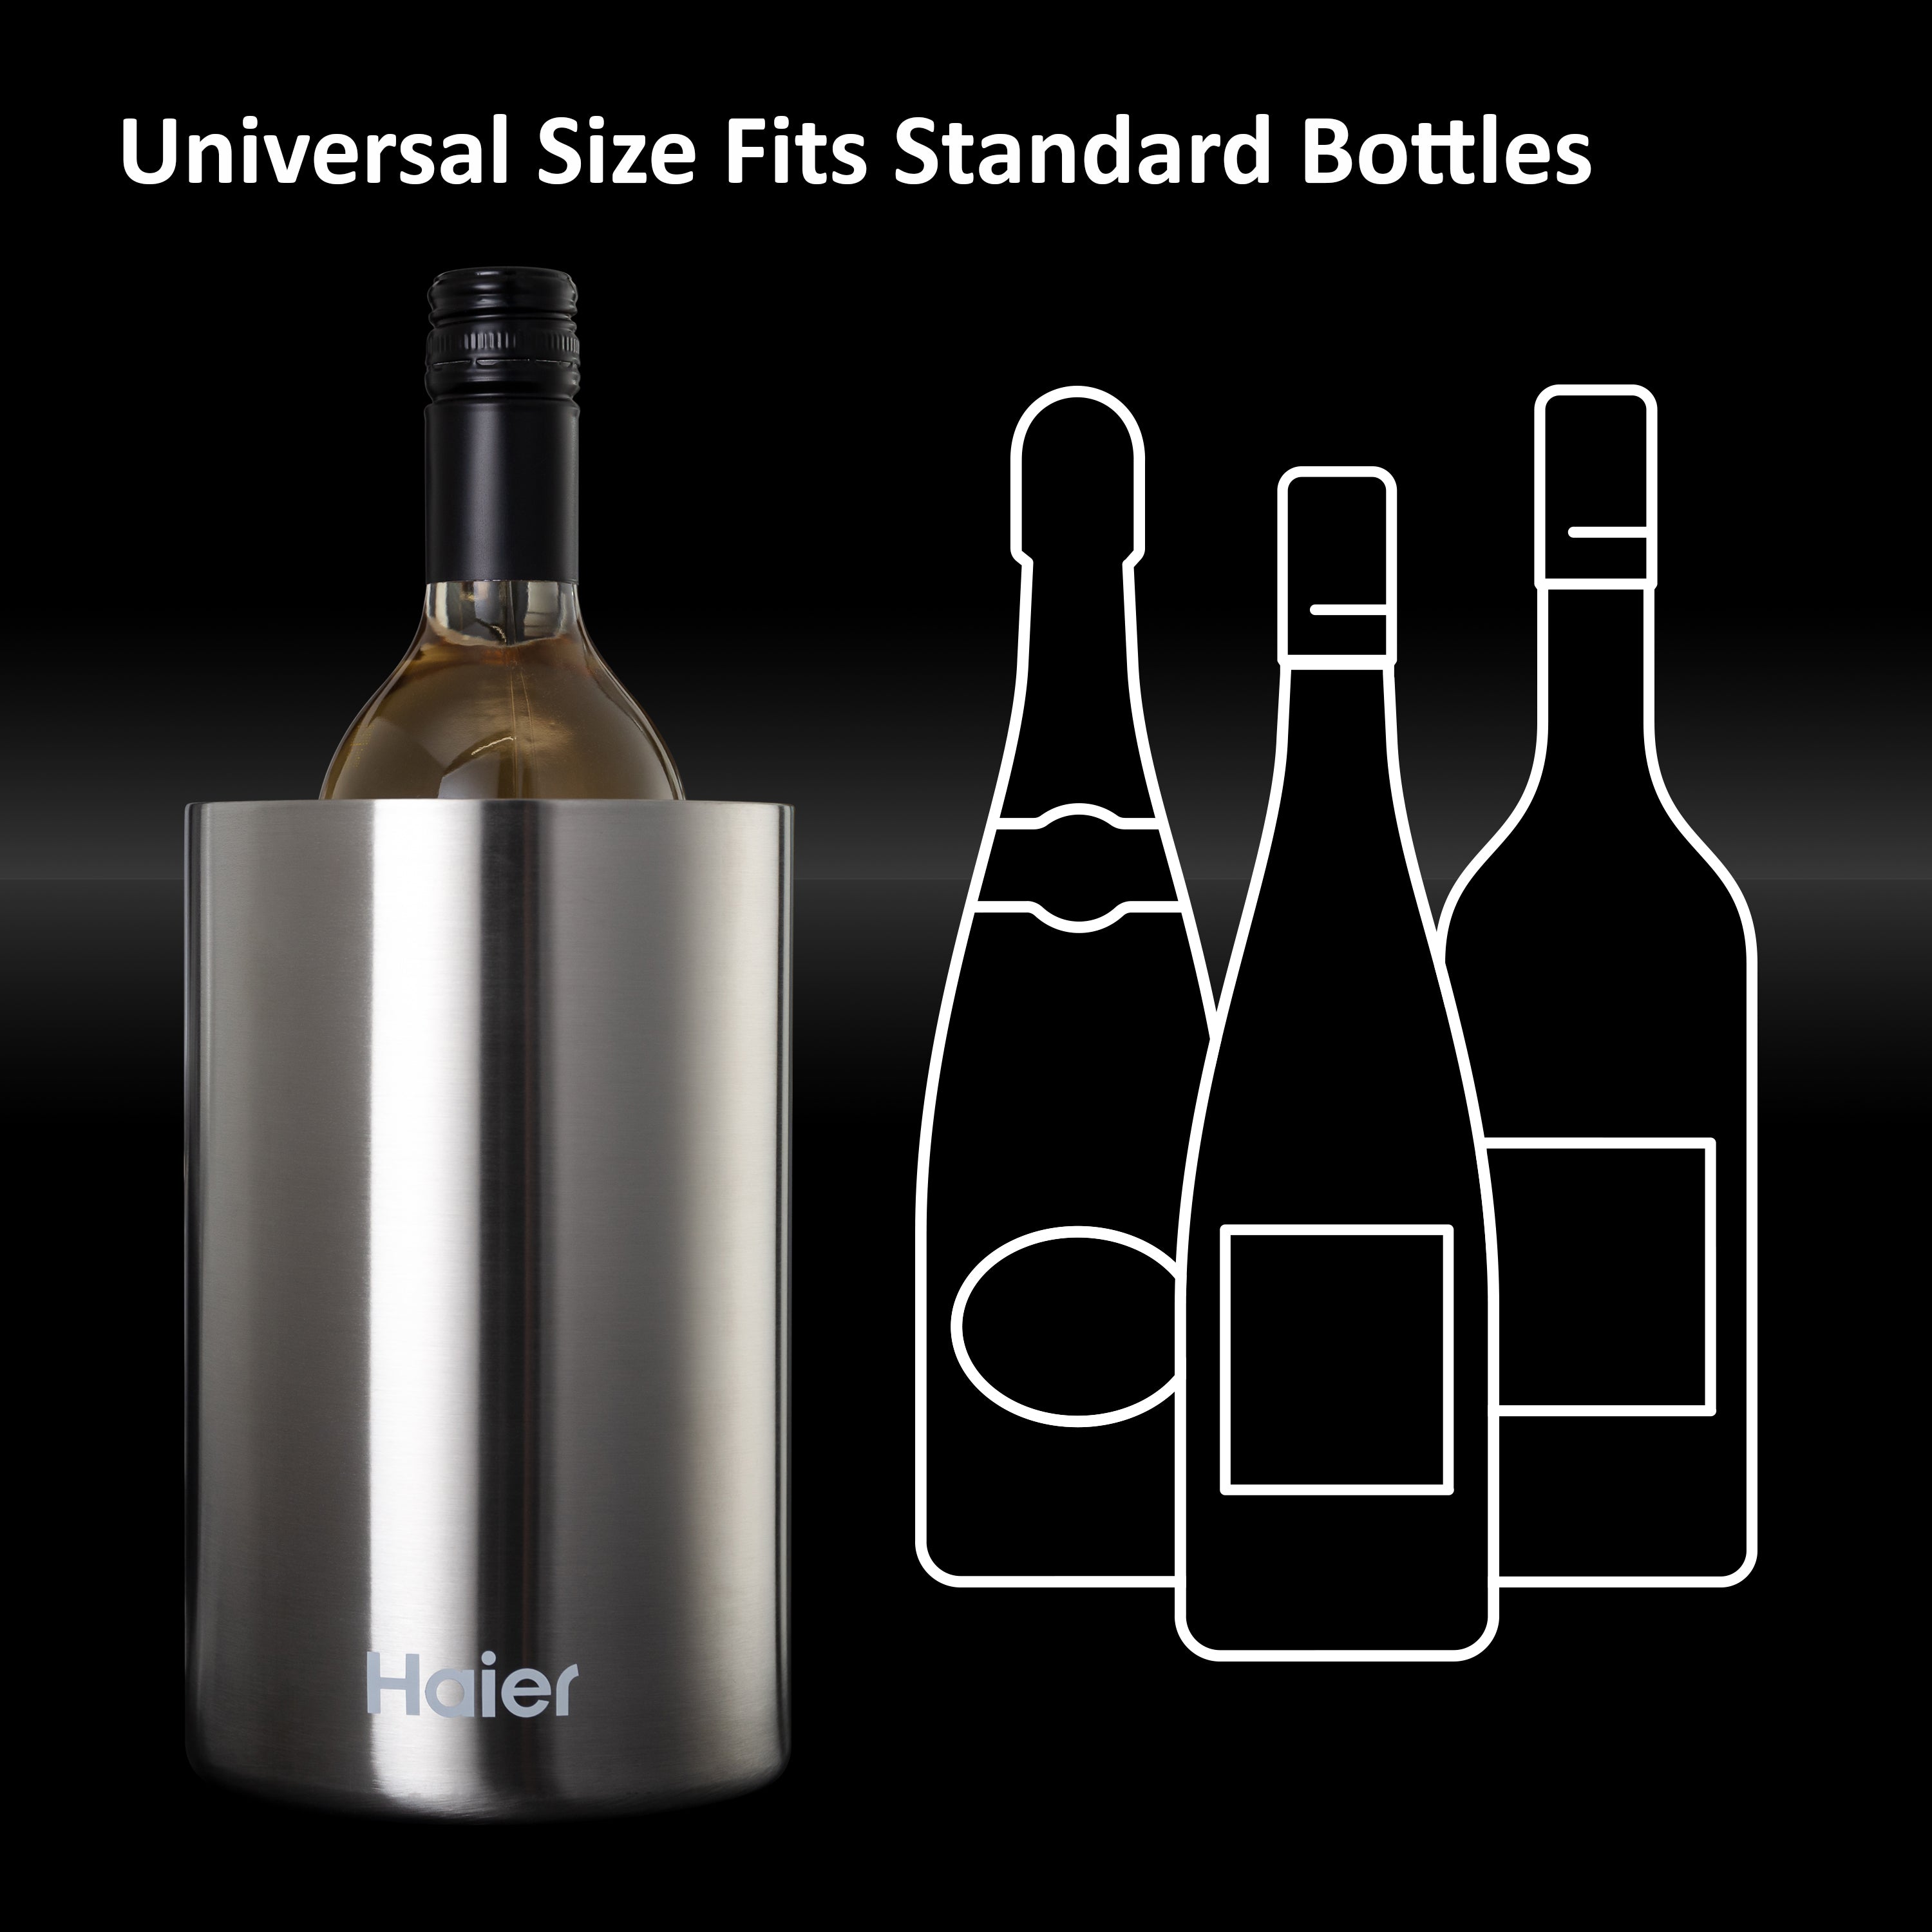 Haier Wine Accessory Bundle : Rechargeable Electric Wine set + Wine Bucket